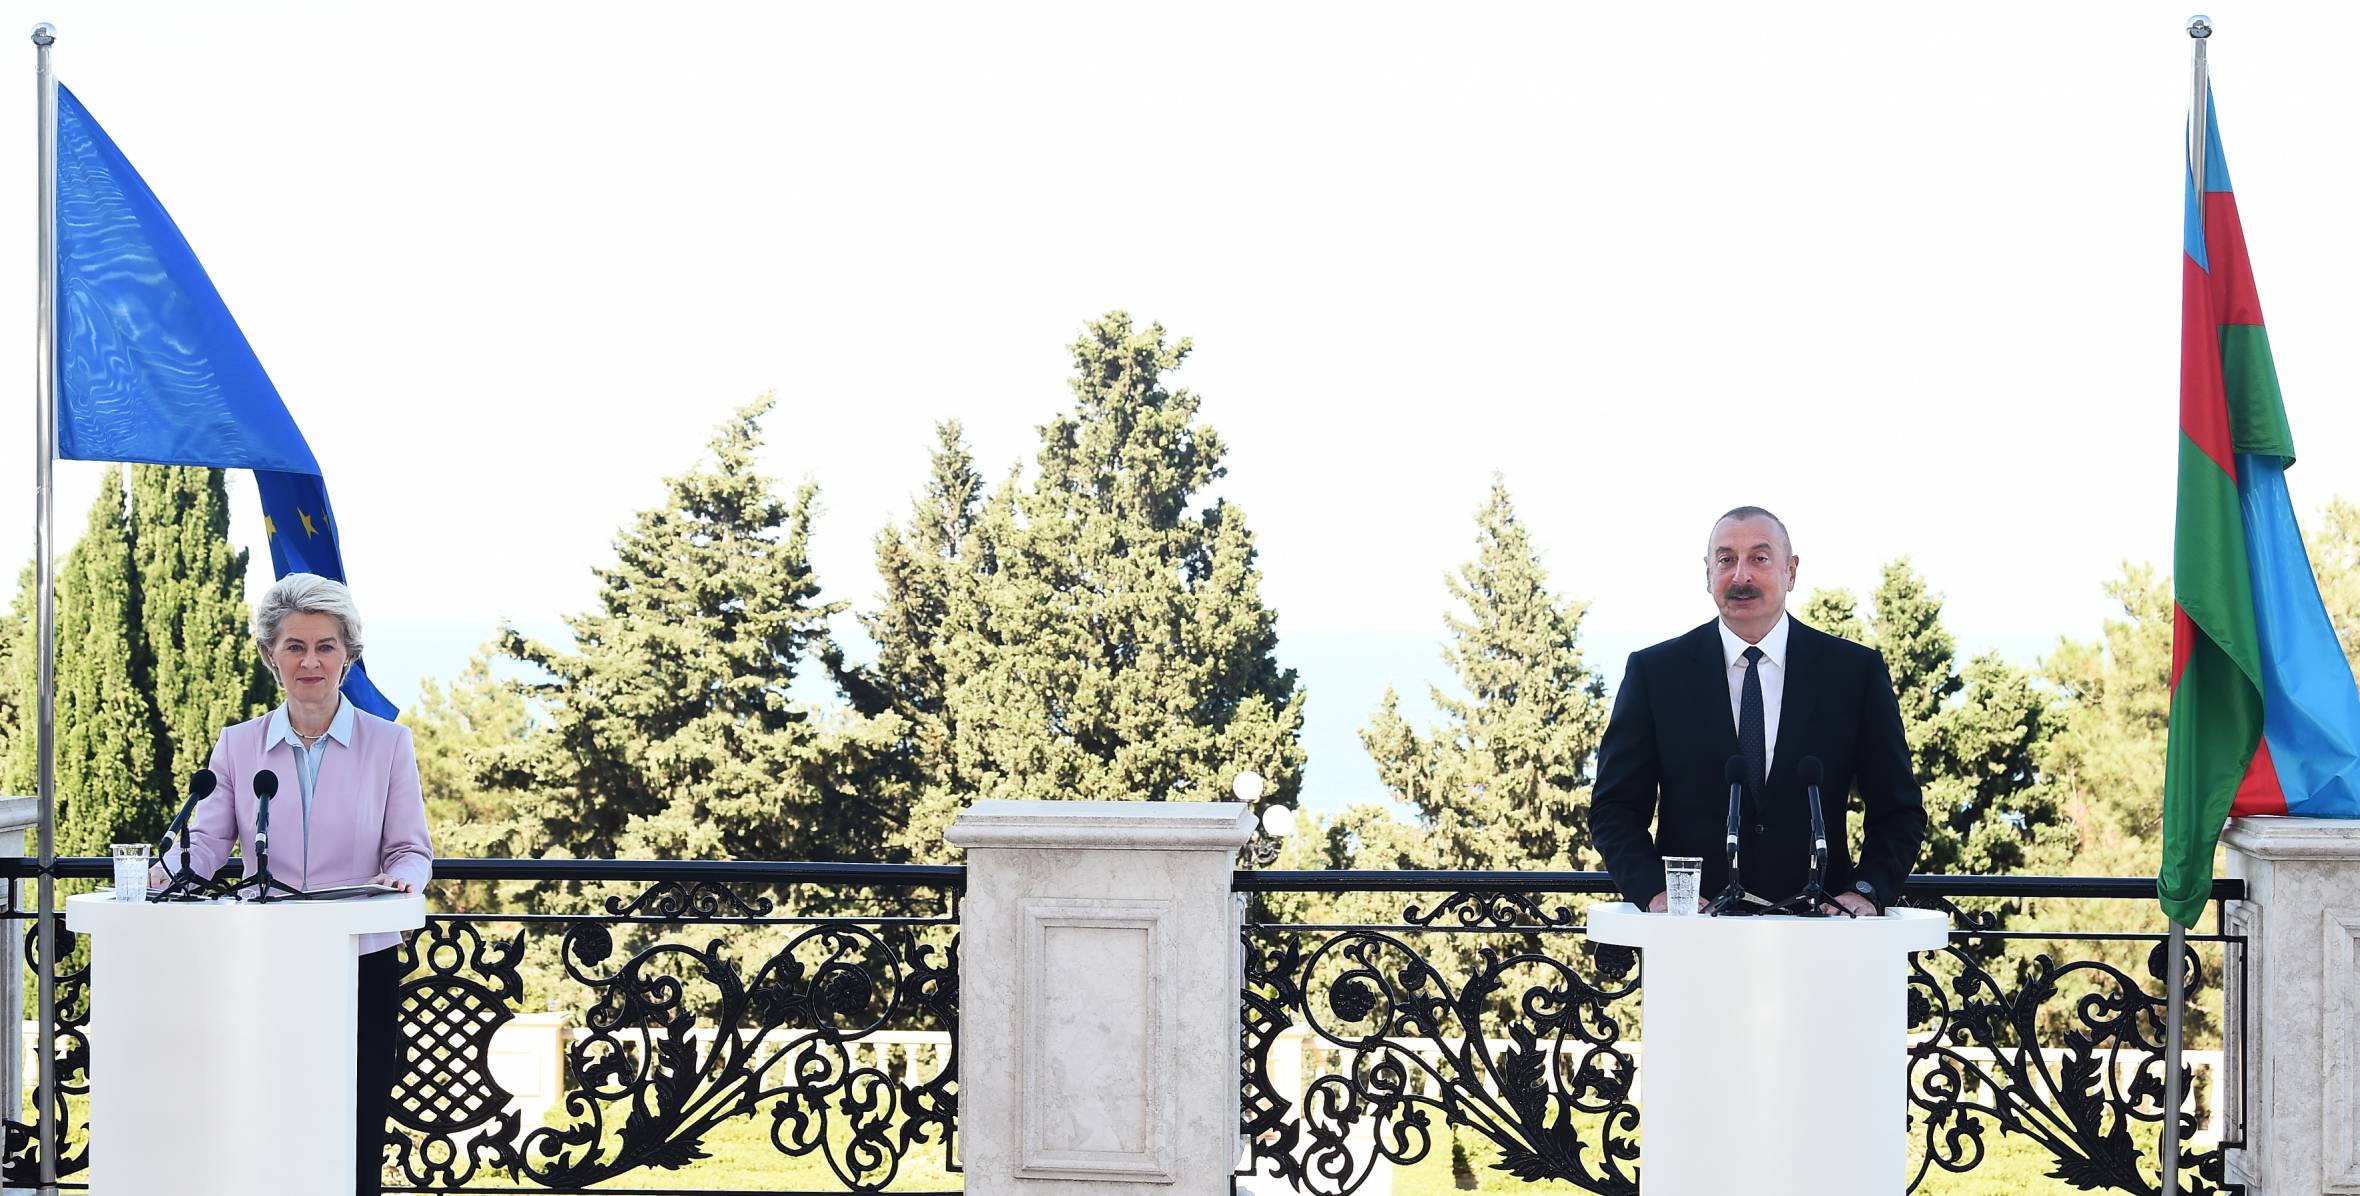 Ilham Aliyev, President of European Commission made press statements